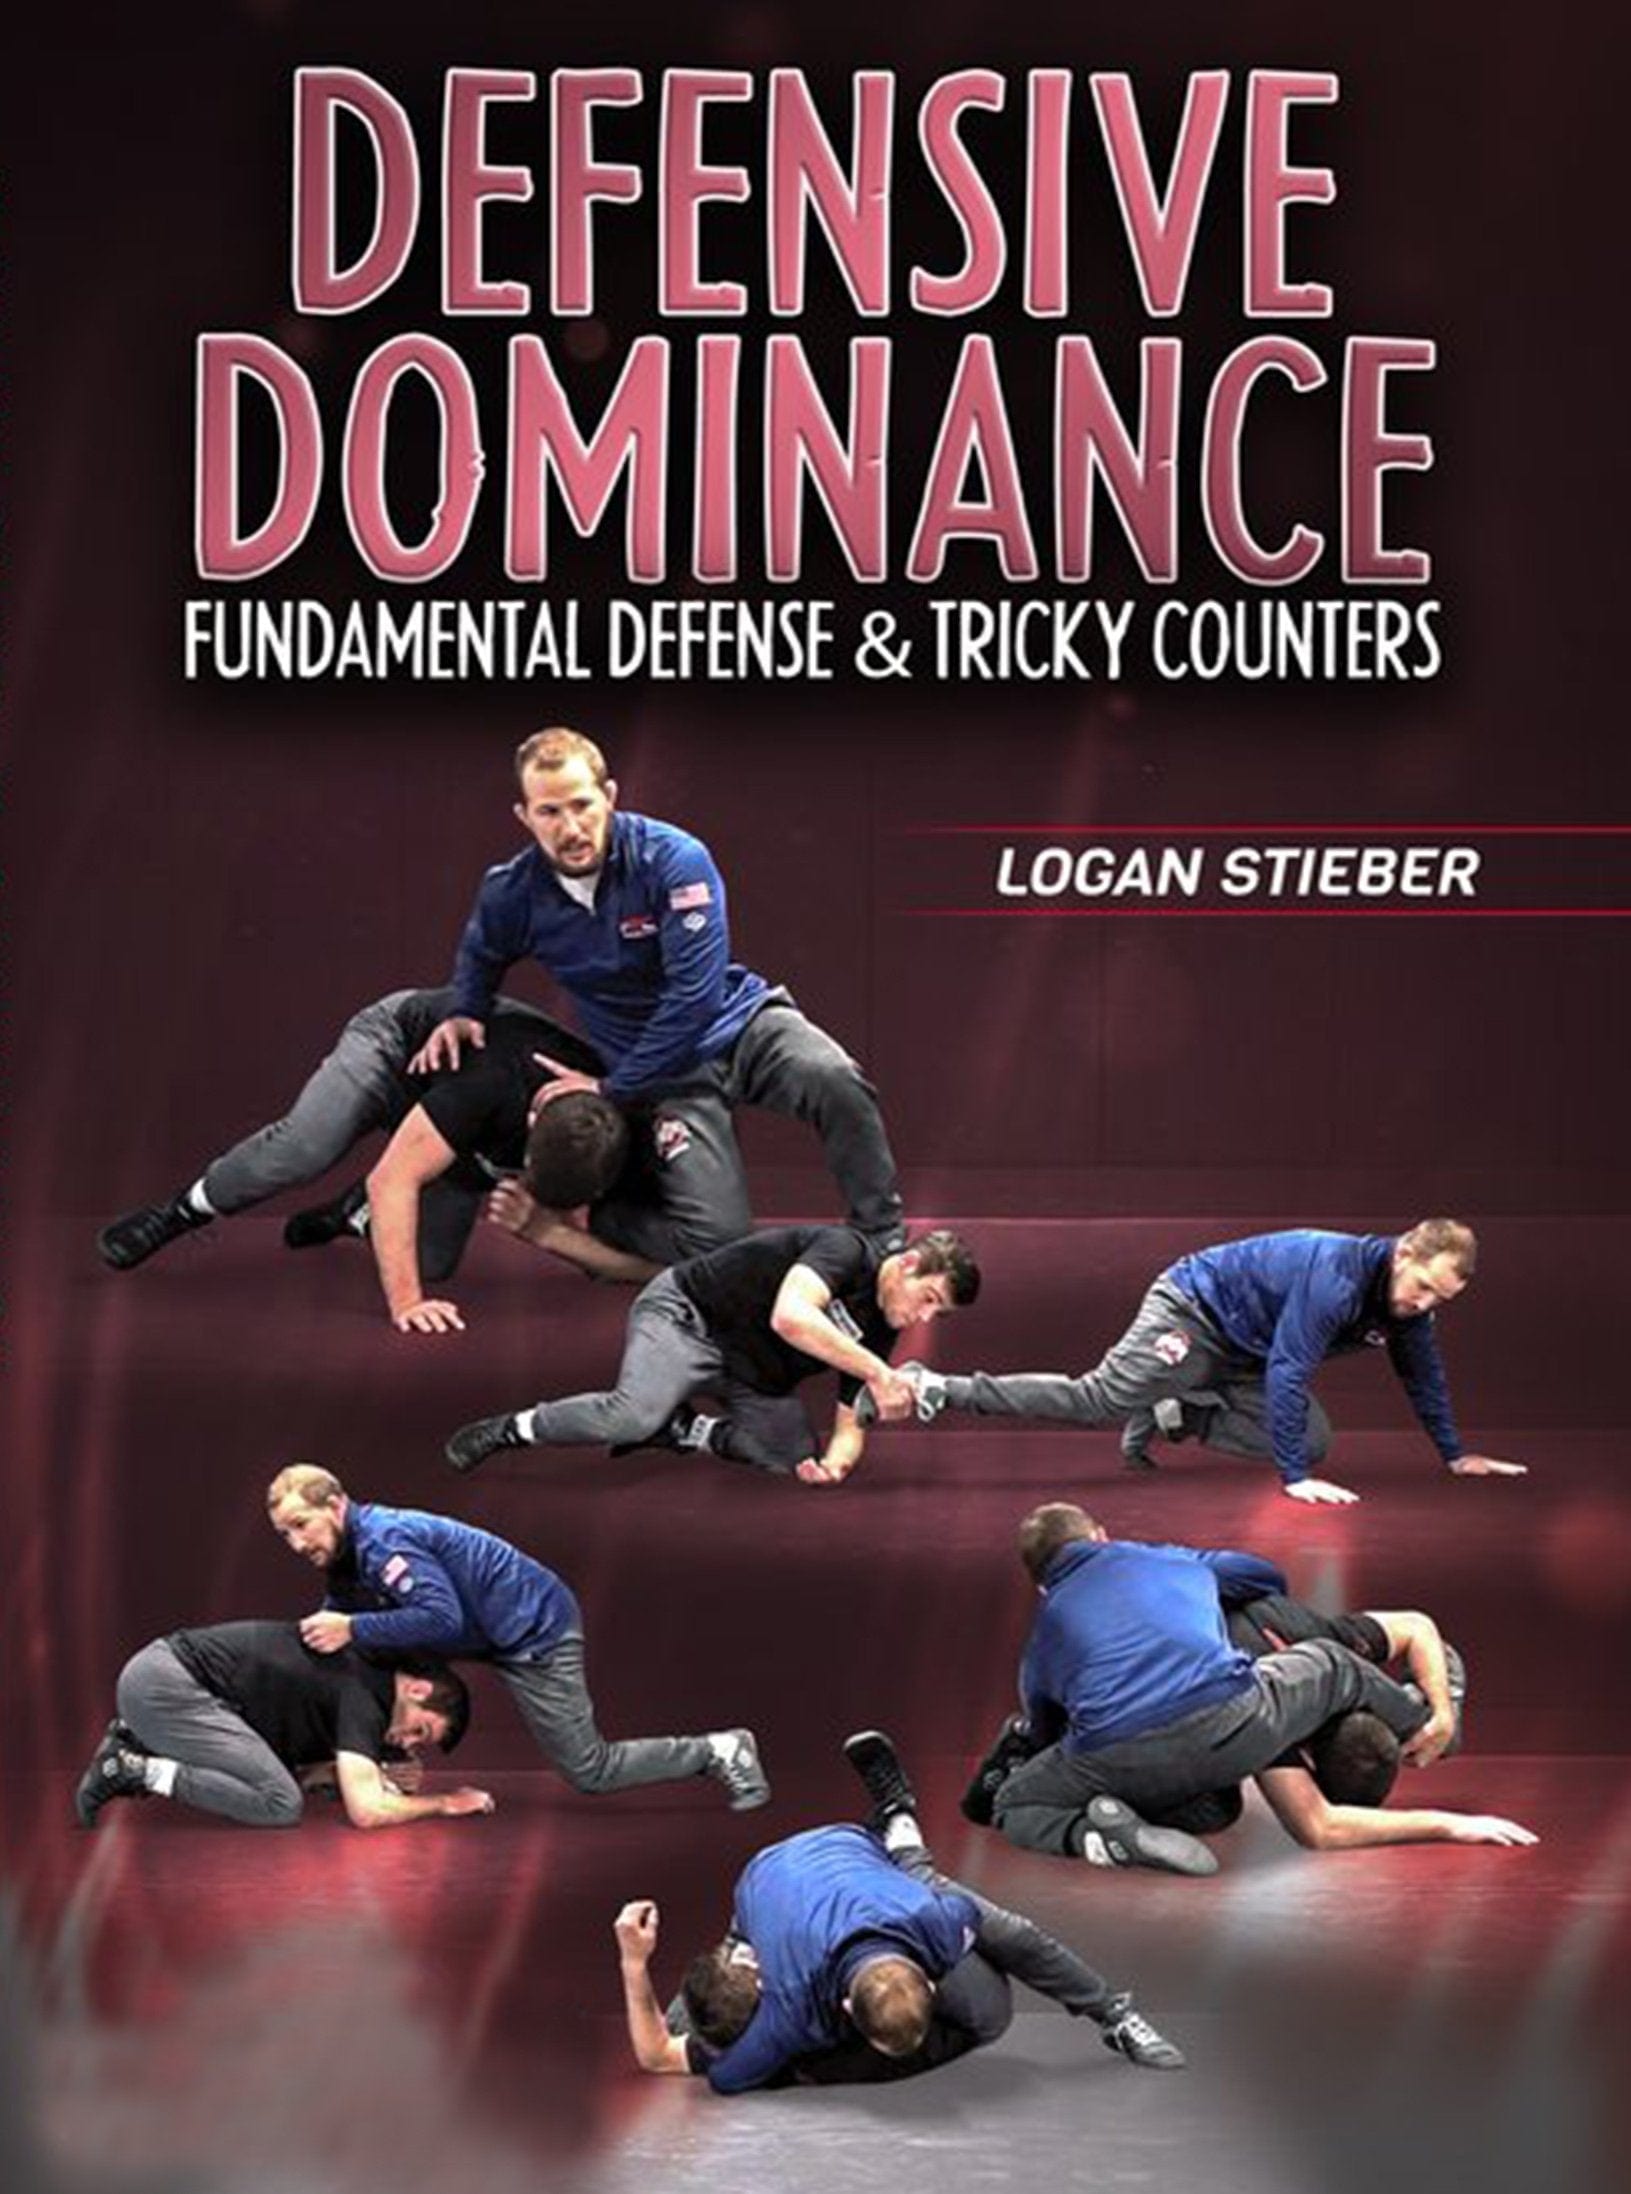 Defensive Dominance by Logan Stieber - Fanatic Wrestling